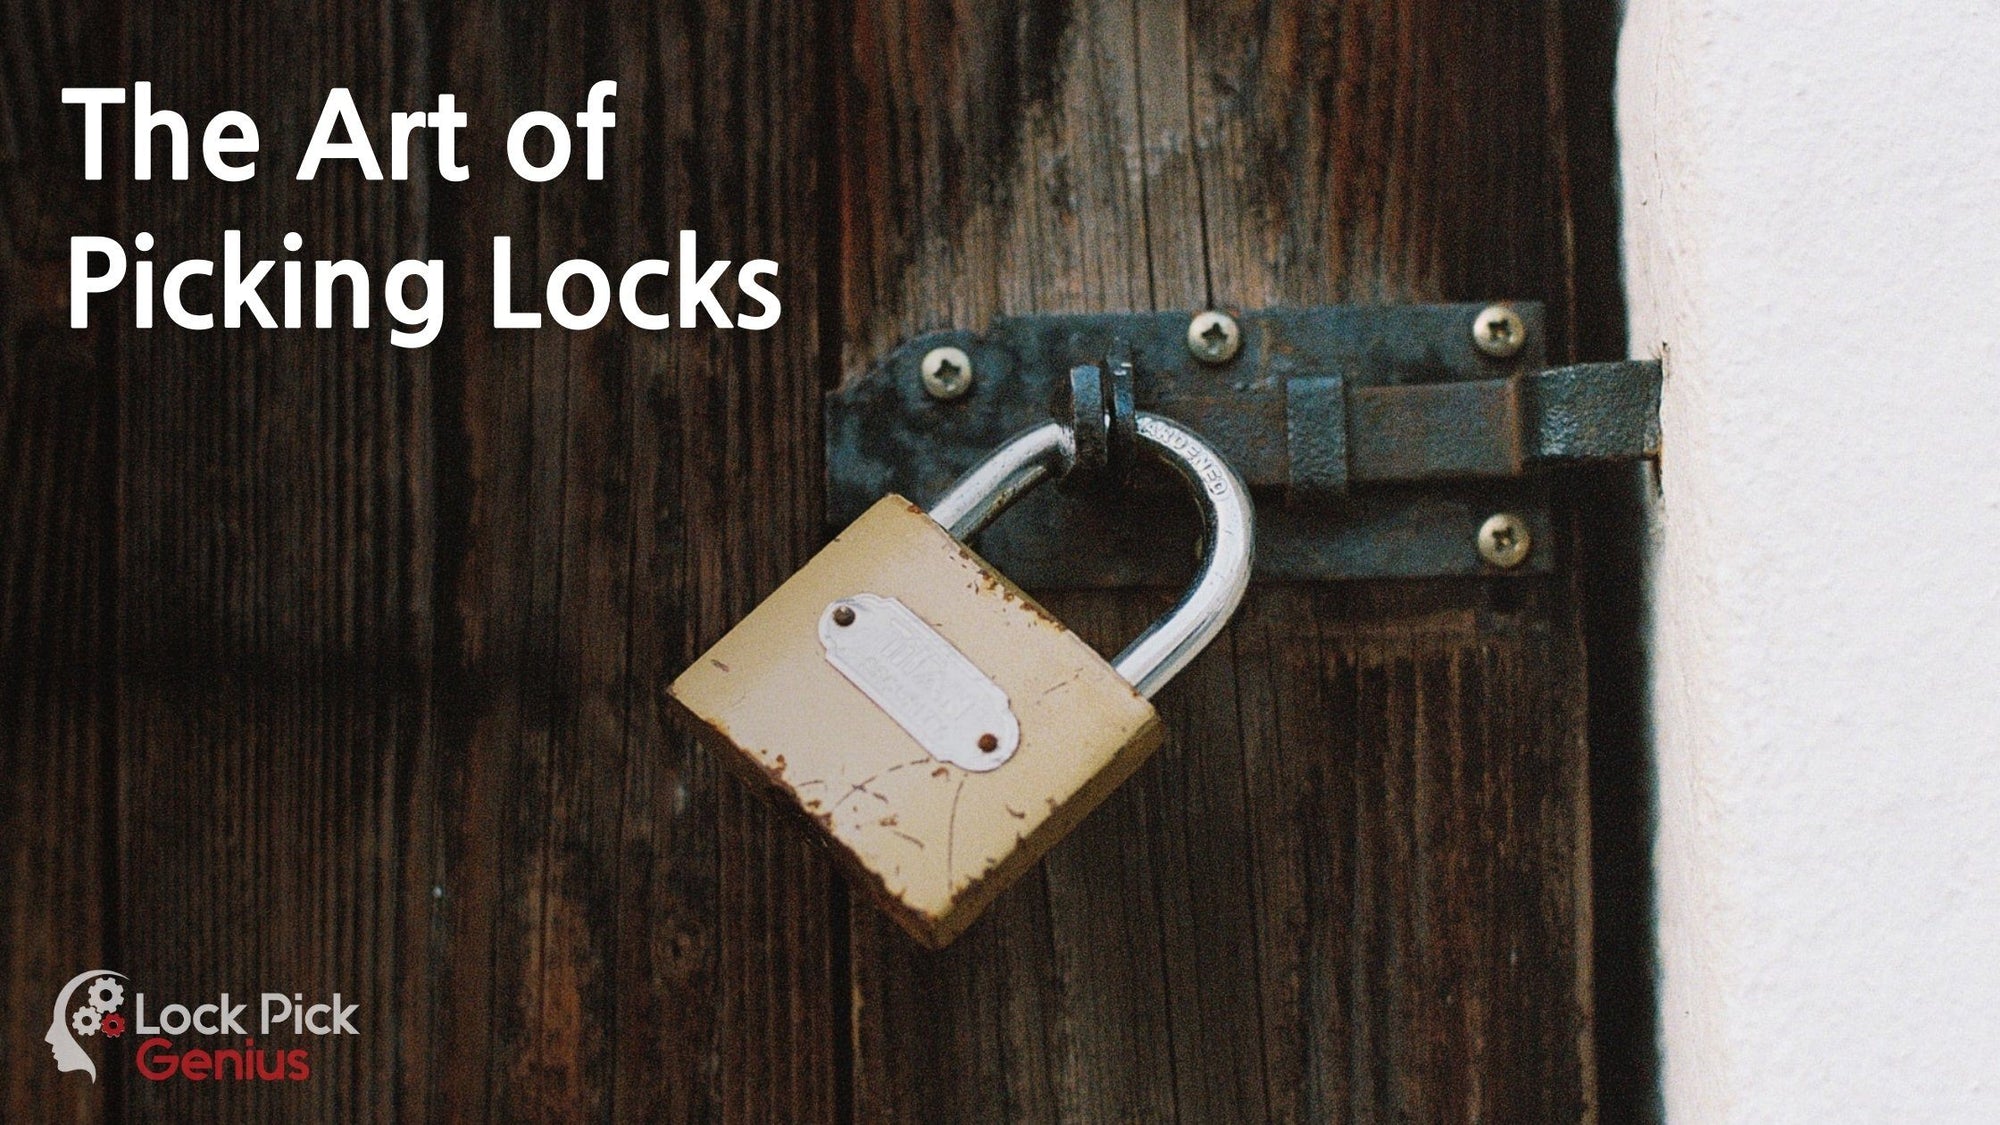 The Art of Picking Locks